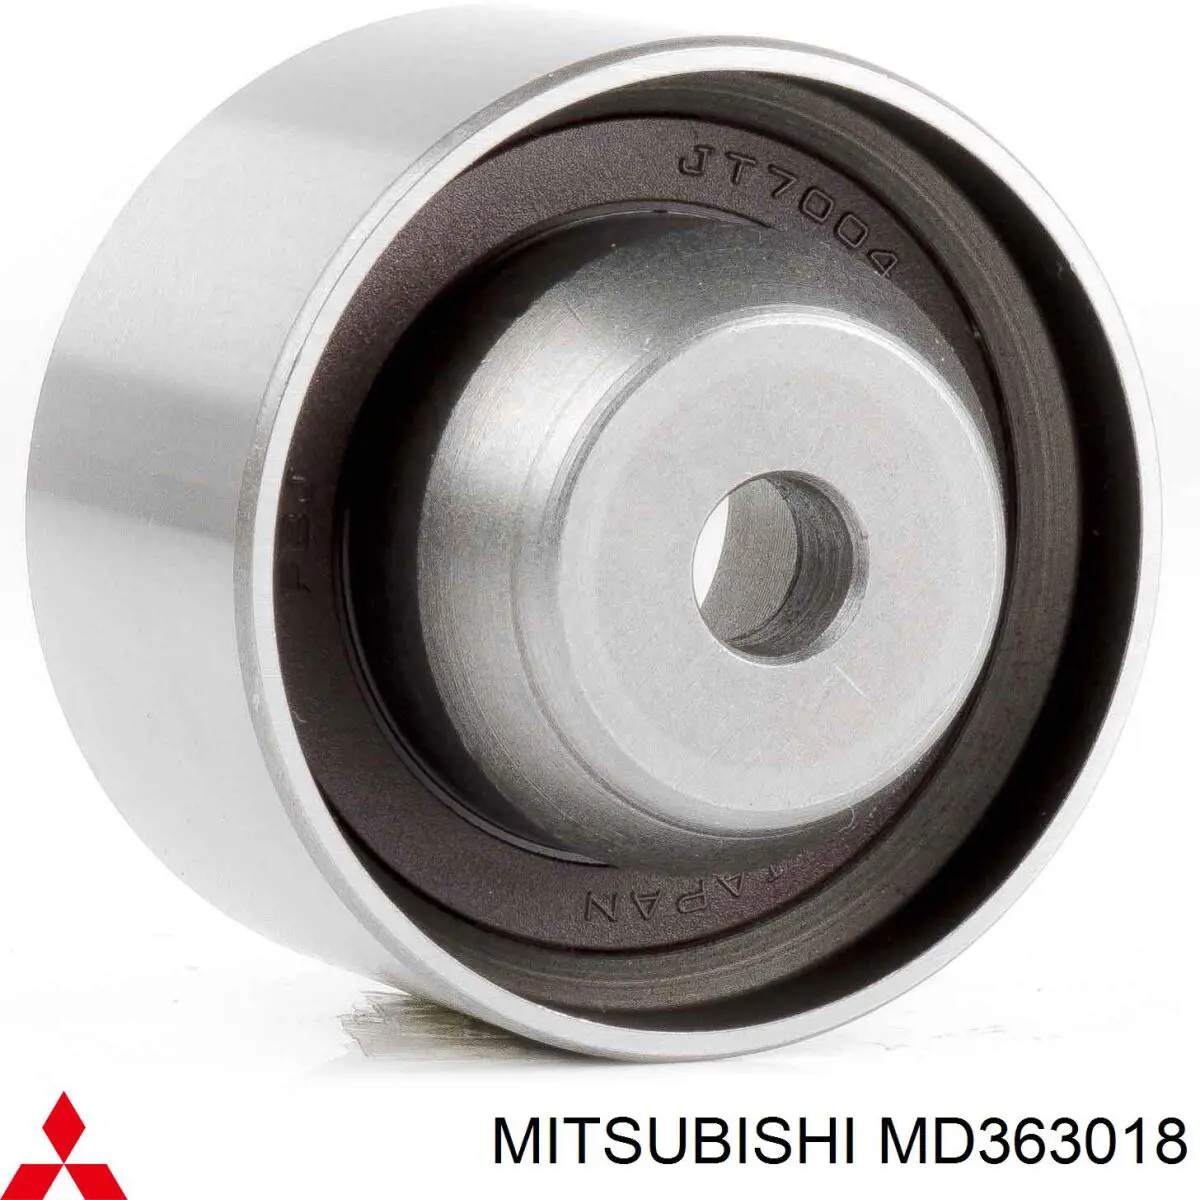 MD363018 Mitsubishi ролик ремня грм паразитный